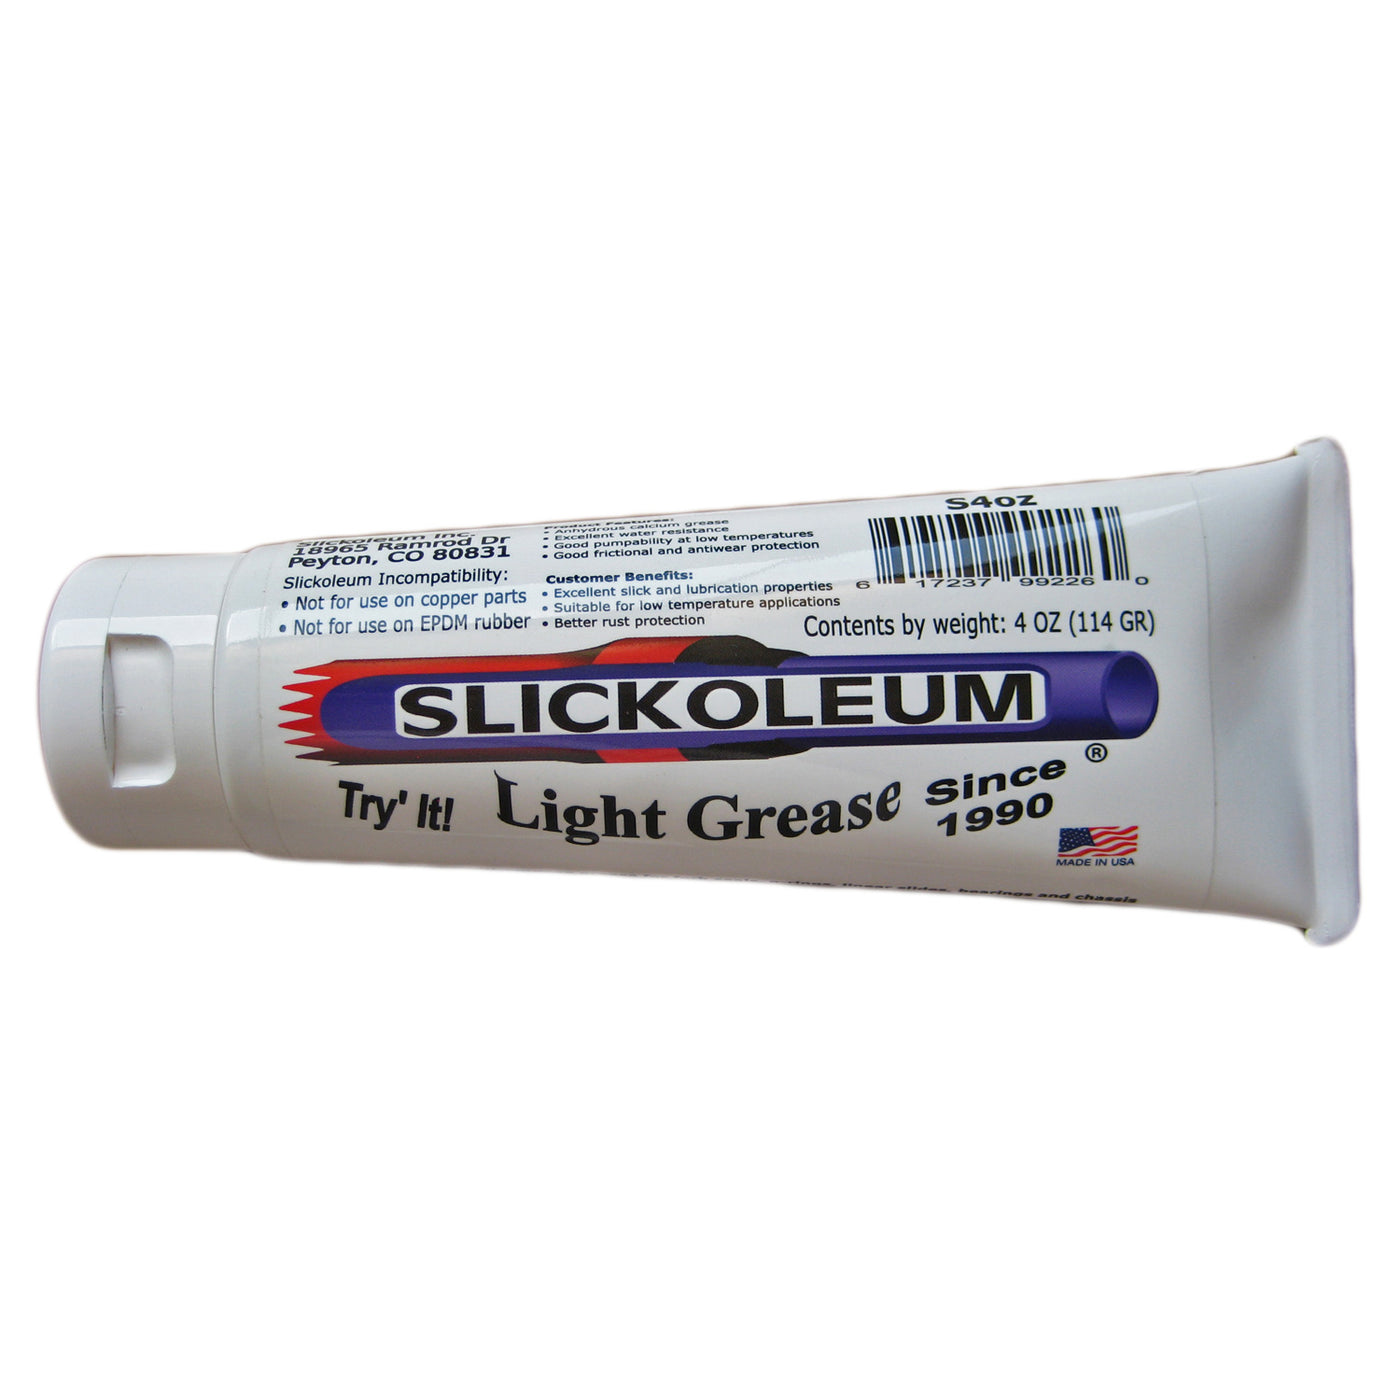 Slickoleum Friction Reducing Light Grease for Fox / Rock Shox Suspension Fork Shock 4oz Tube